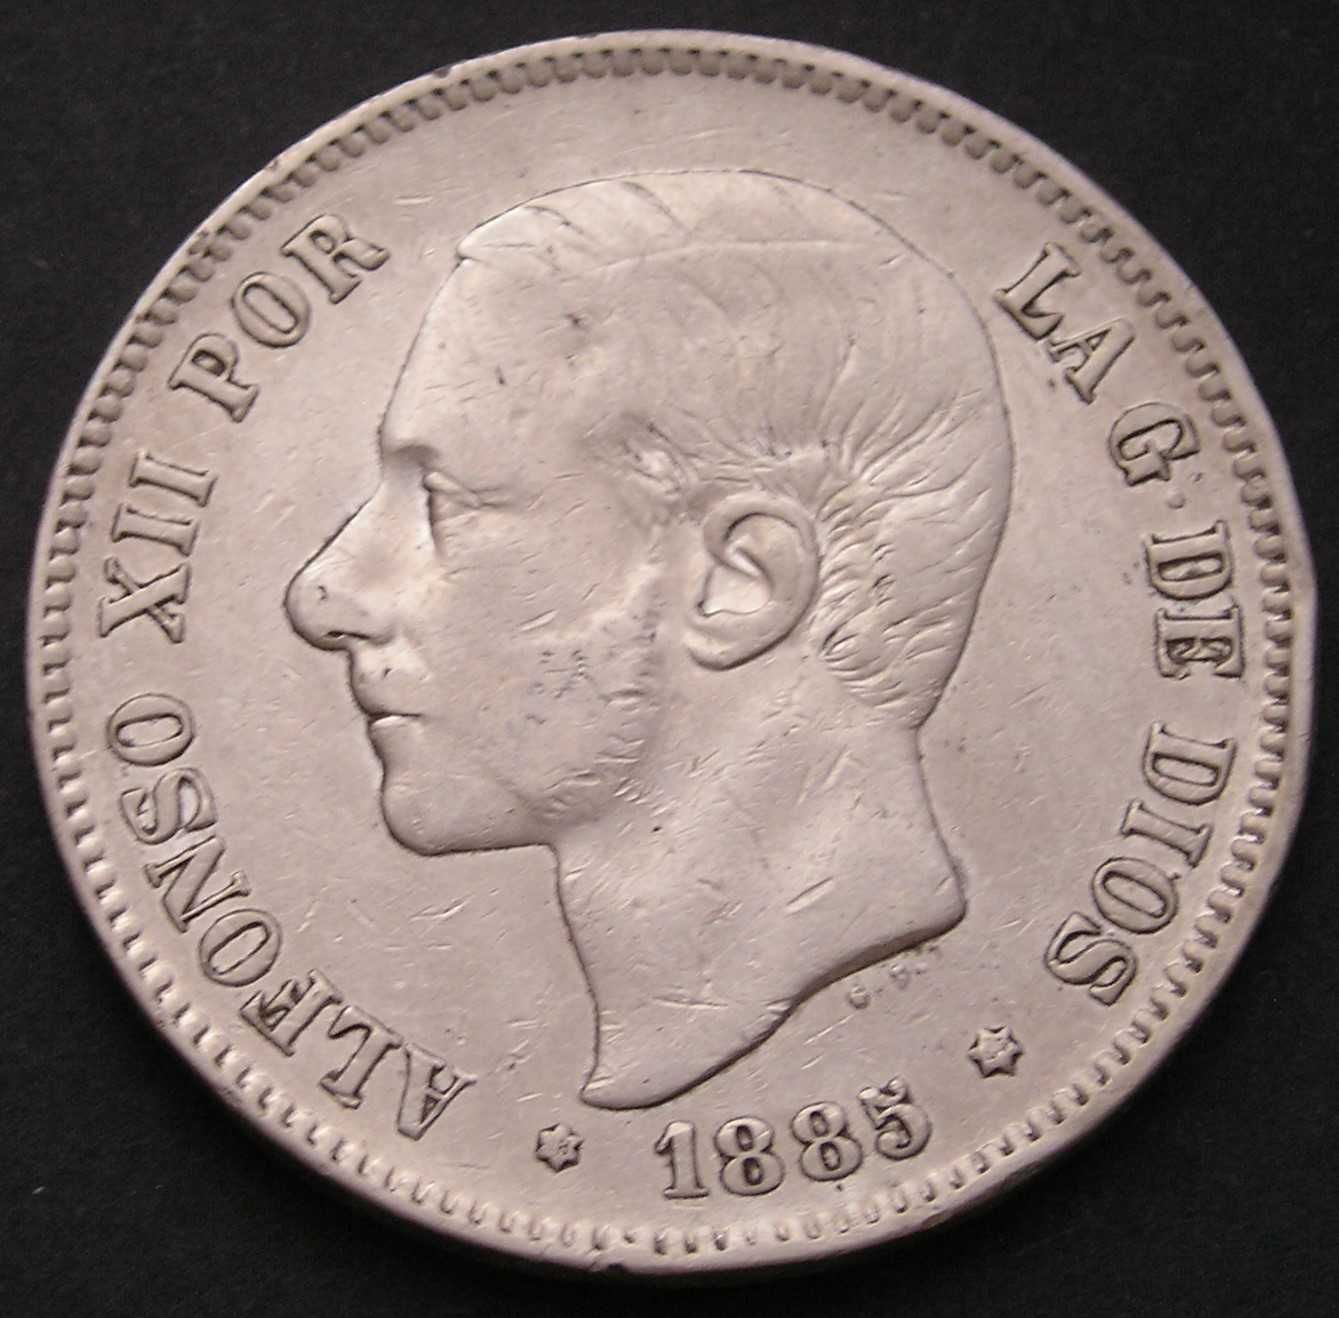 Hiszpania 5 peset 1885 - Alfons XII - srebro